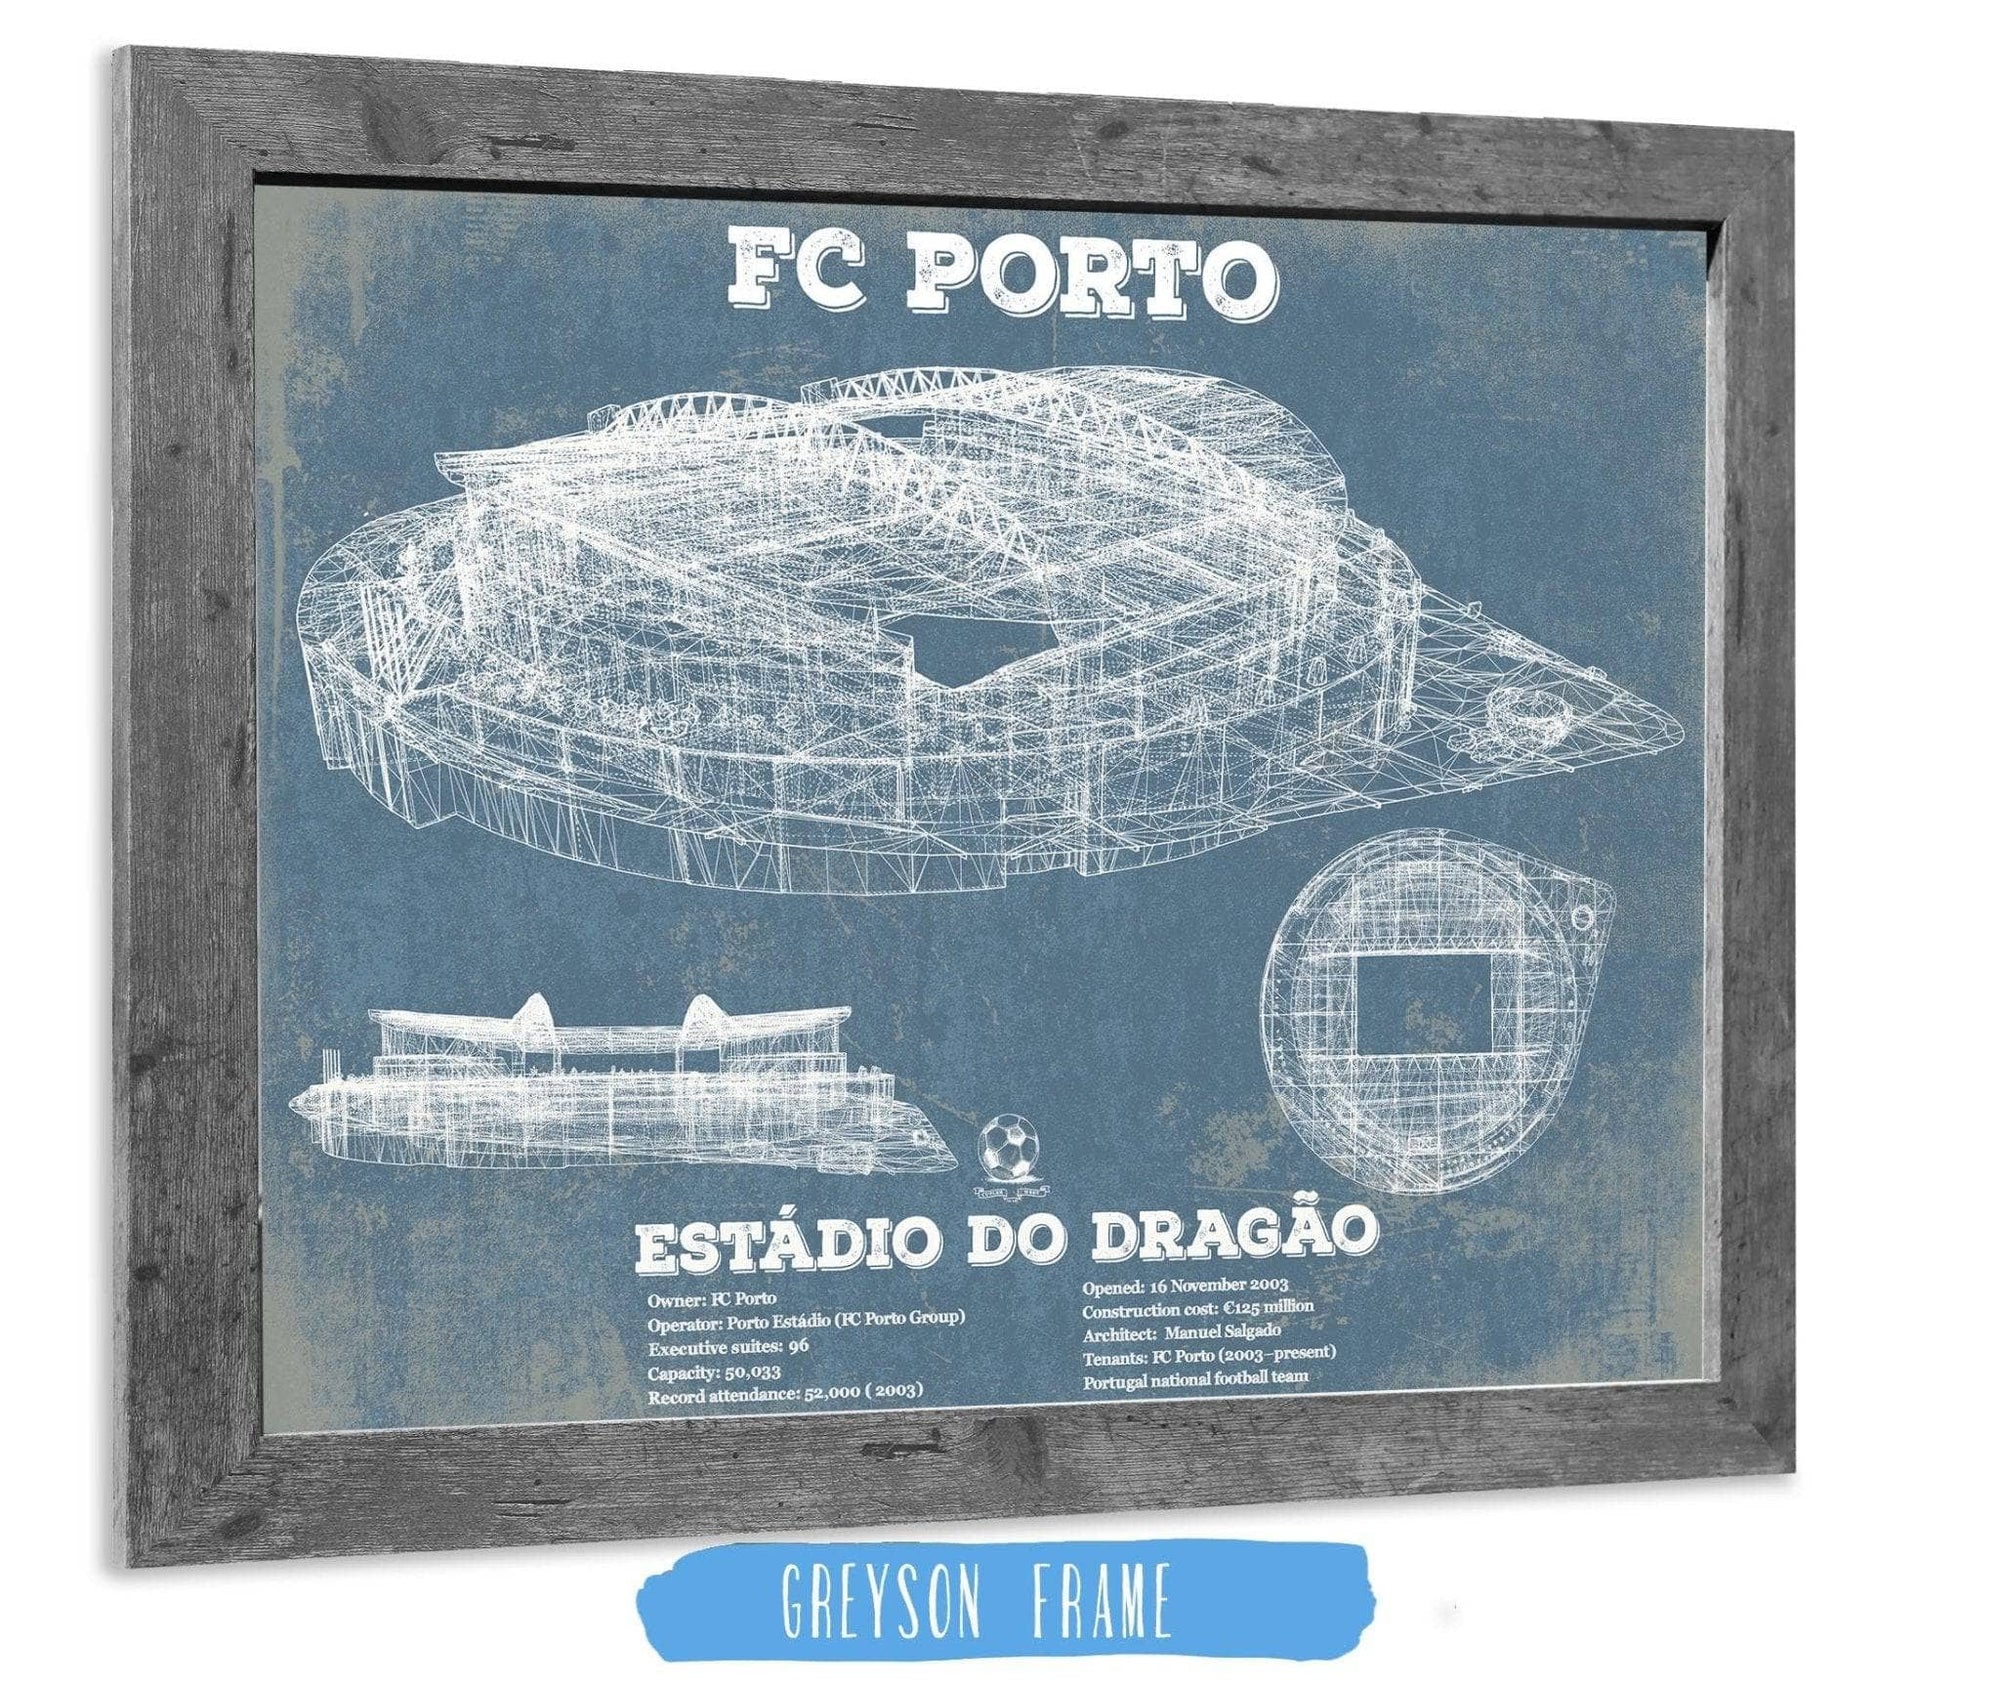 Cutler West Soccer Collection 20" x 16" / Greyson Frame F.C. Porto Estadio Do Dragao Stadium Blueprint Vintage Soccer Print 845000147_62087